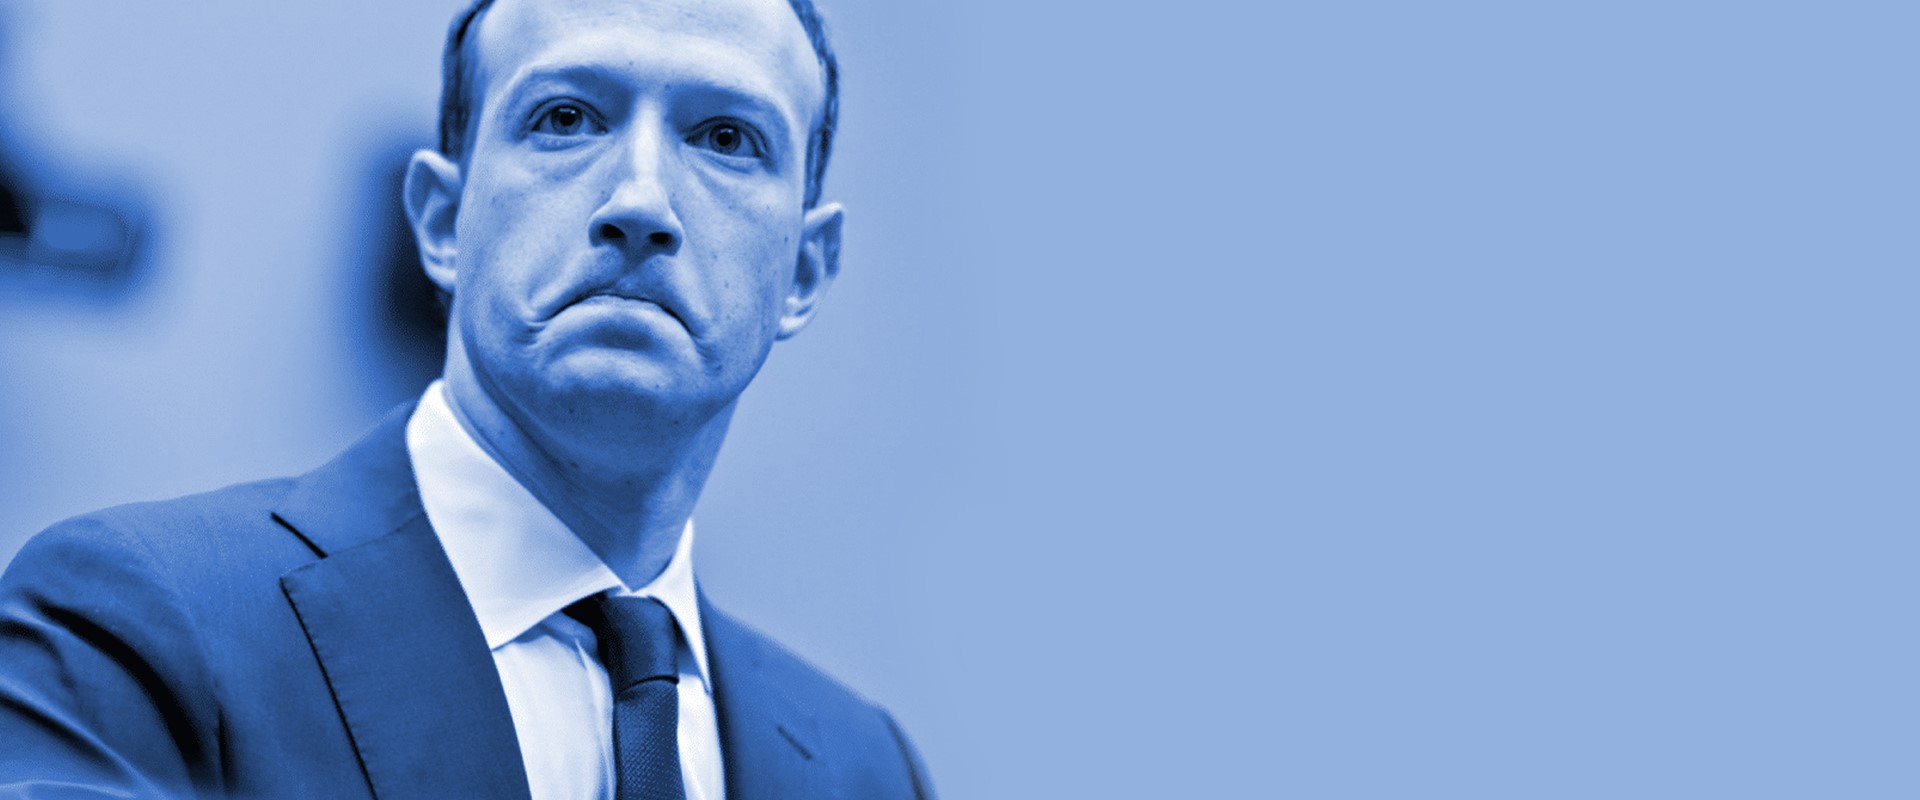 Facebook's meltdown